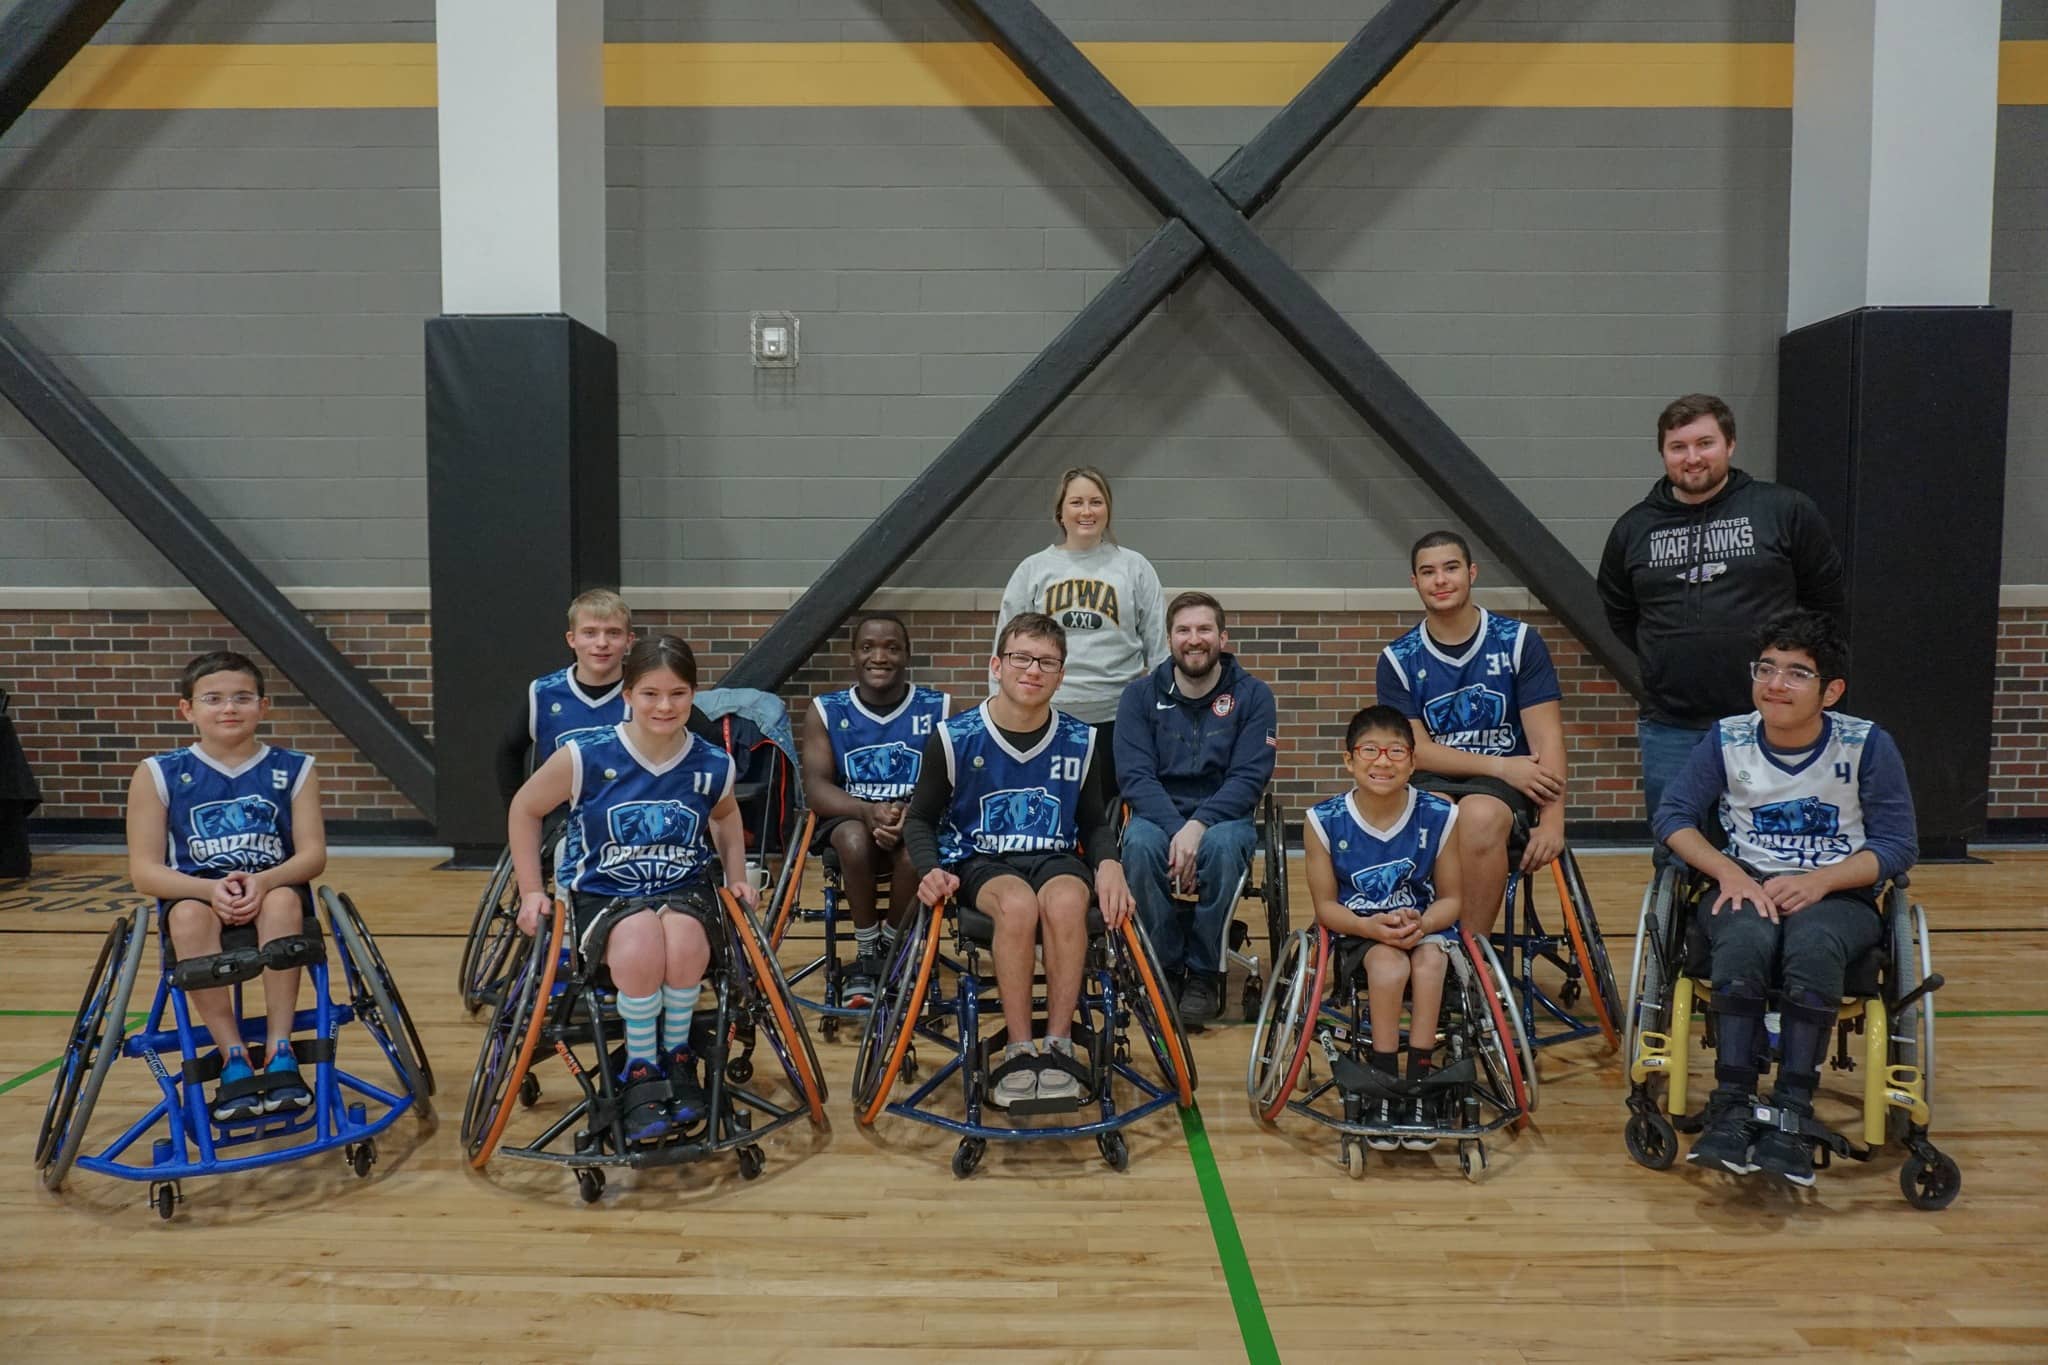 Adaptive Sports Iowa Youth Wheelchair Basketball Tournament